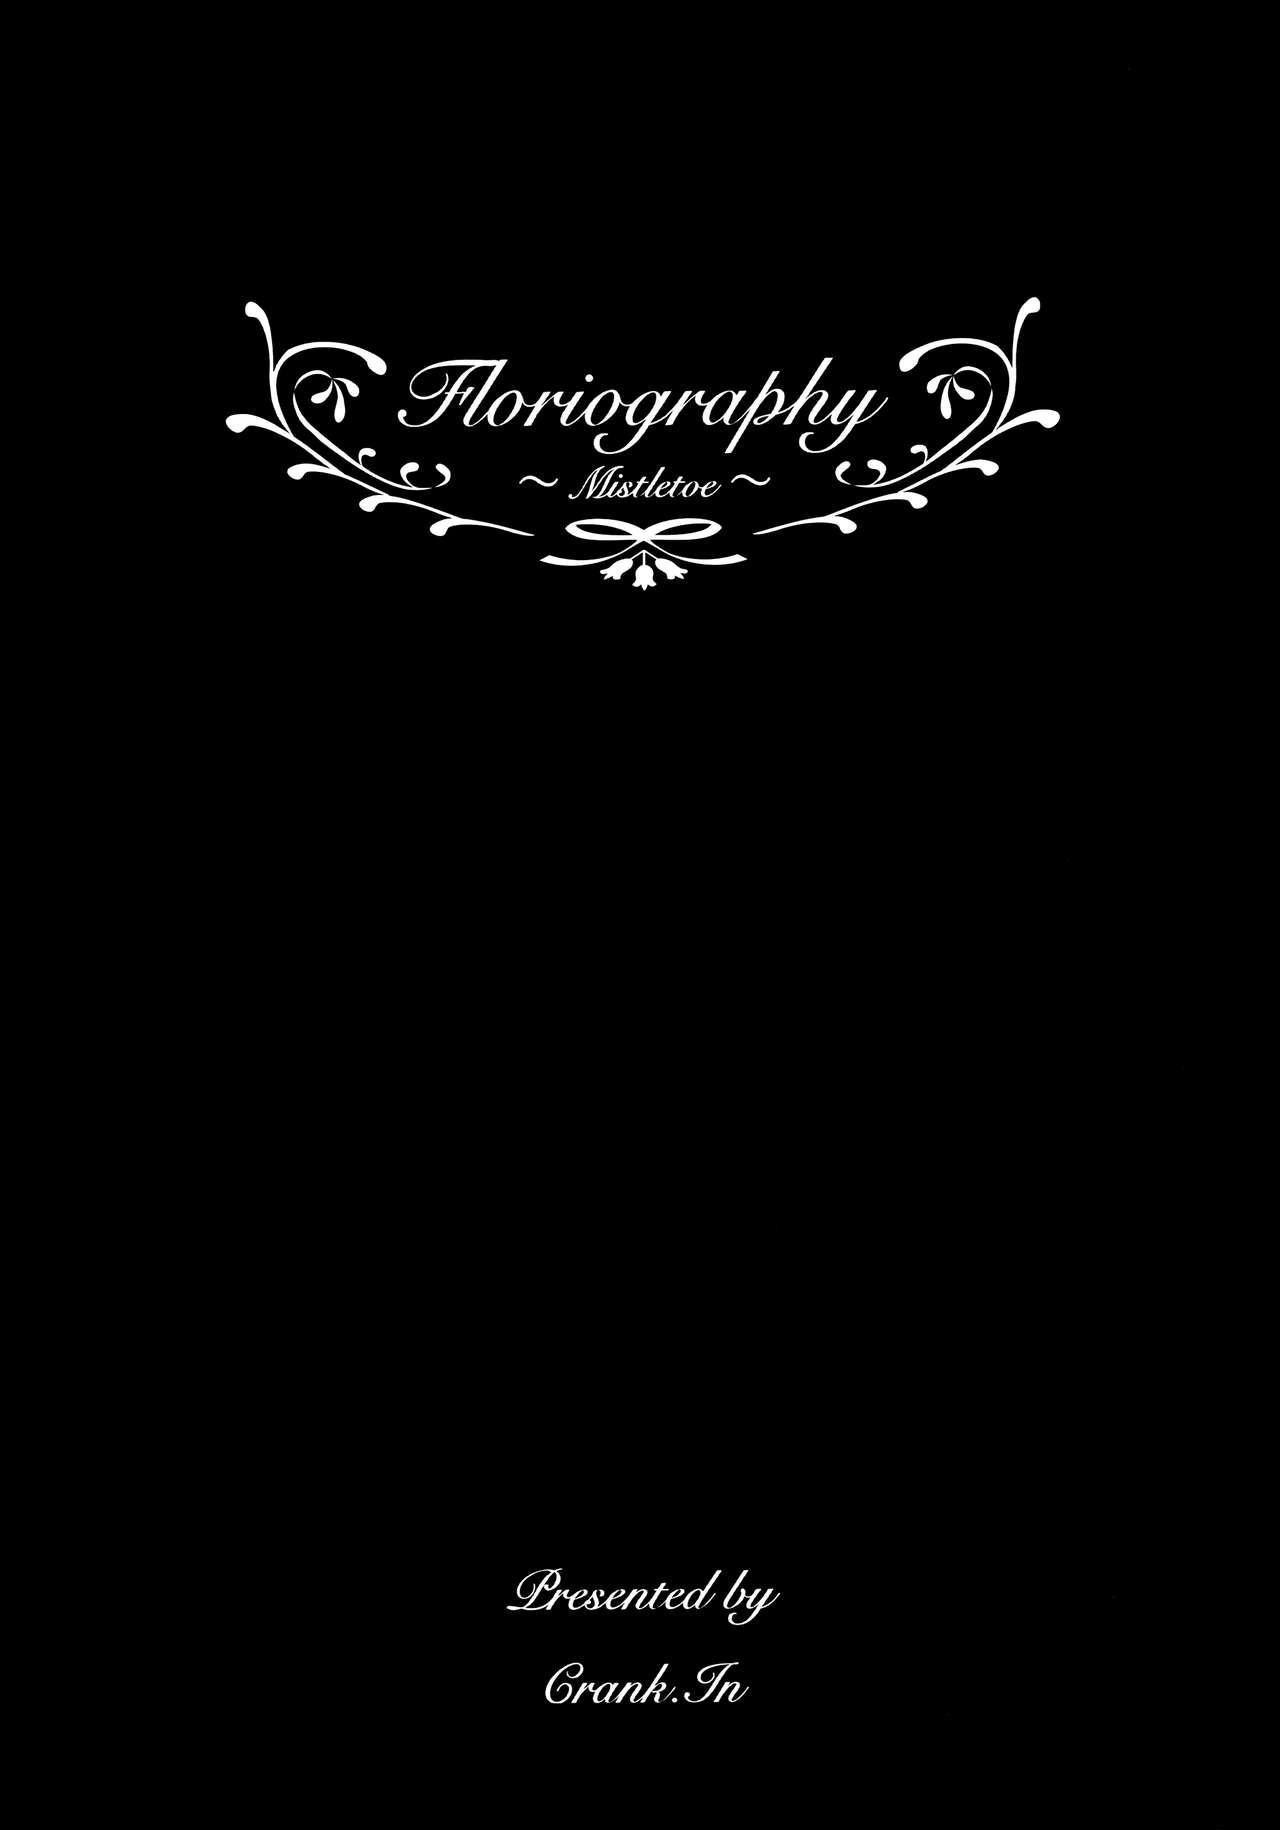 Indo Floriography - Original Harcore - Picture 2